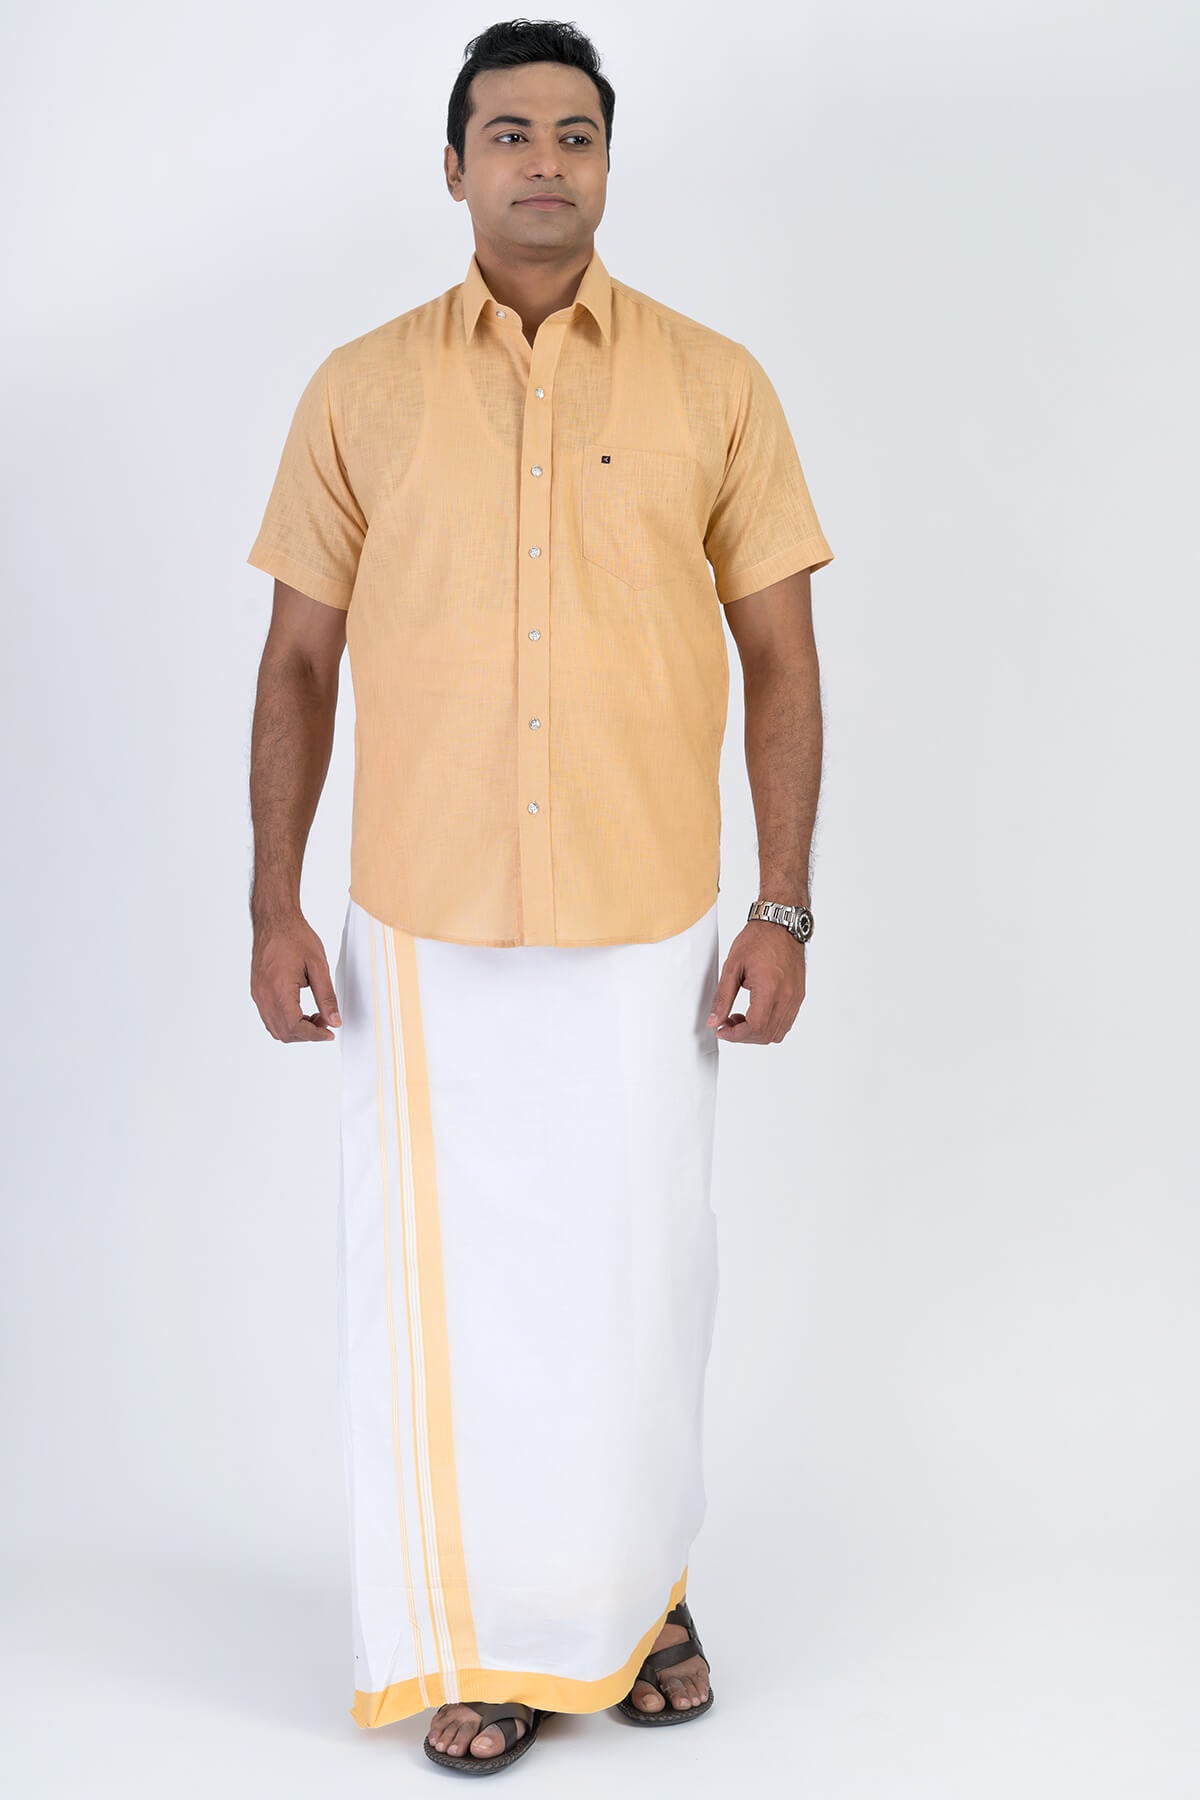 Men's Premium Cotton Dhoti with Sandle Elegant Border